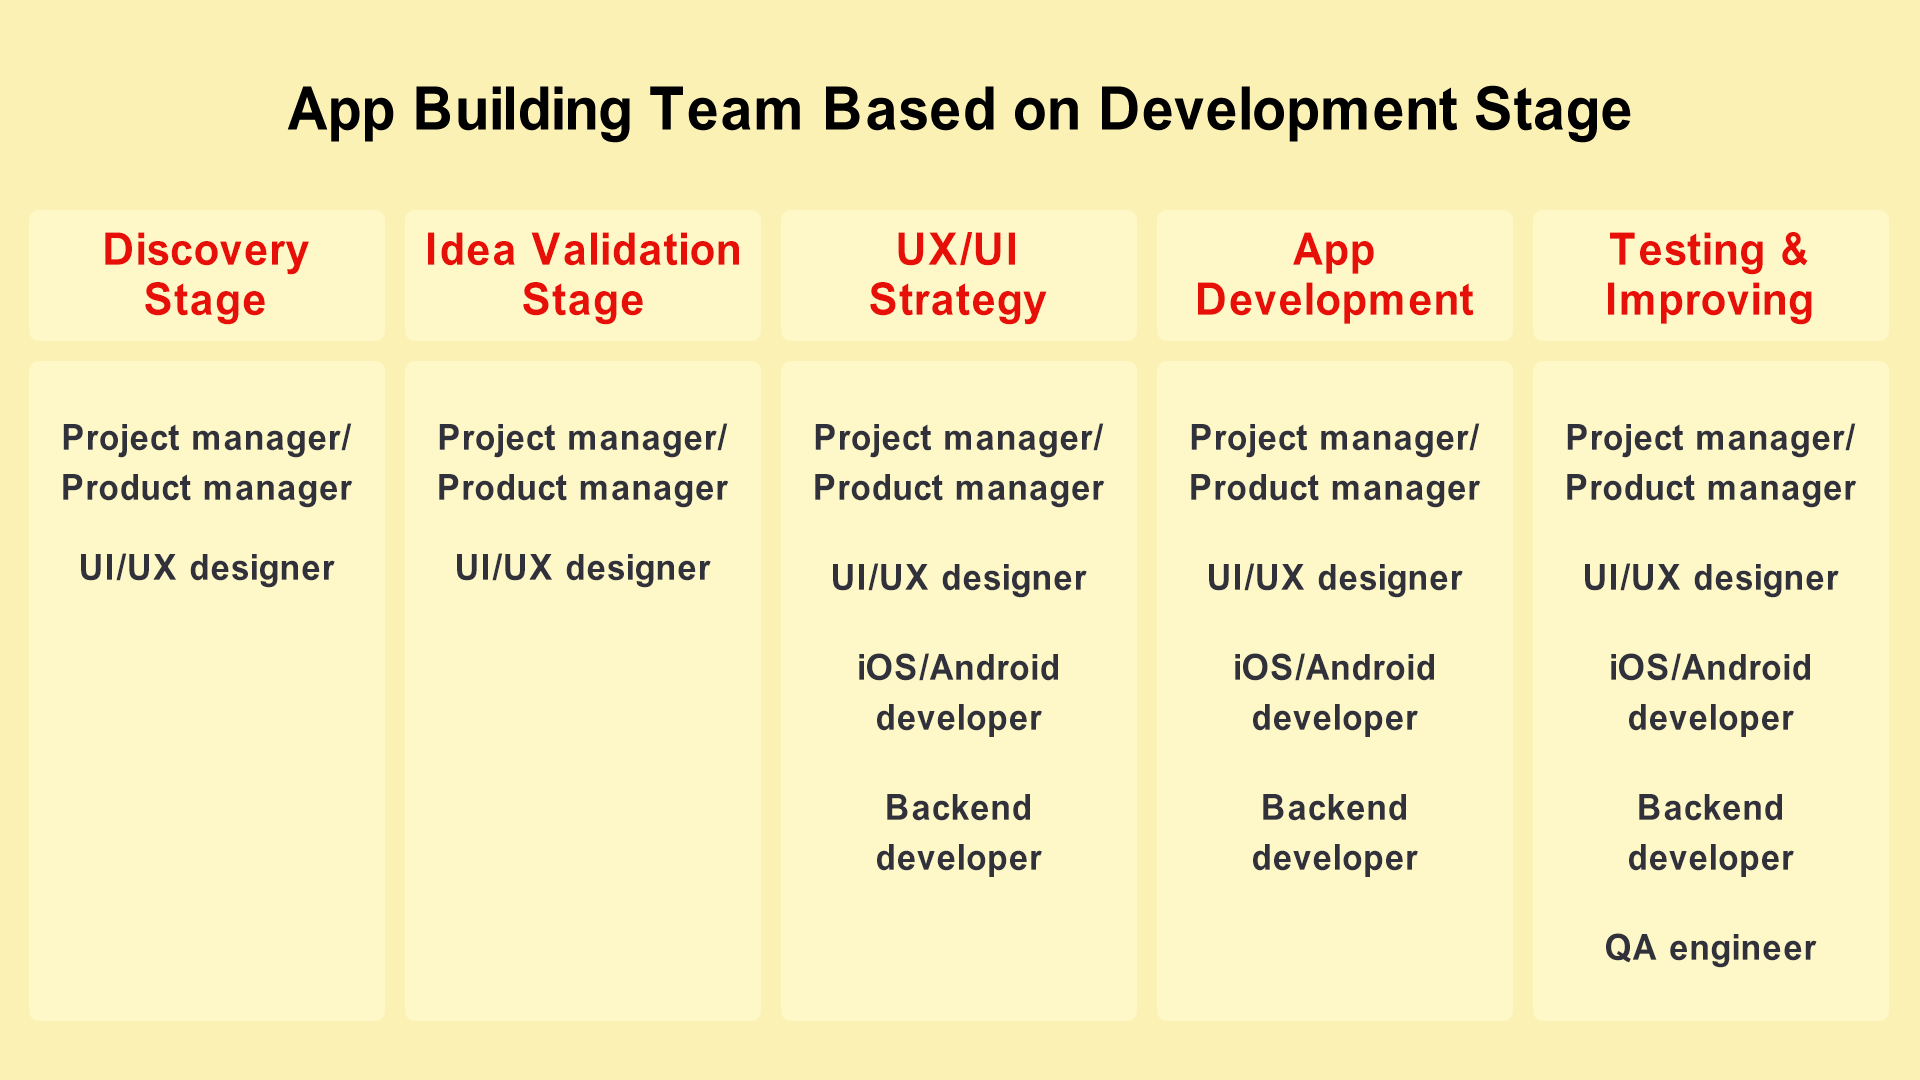 App building team based on development stage